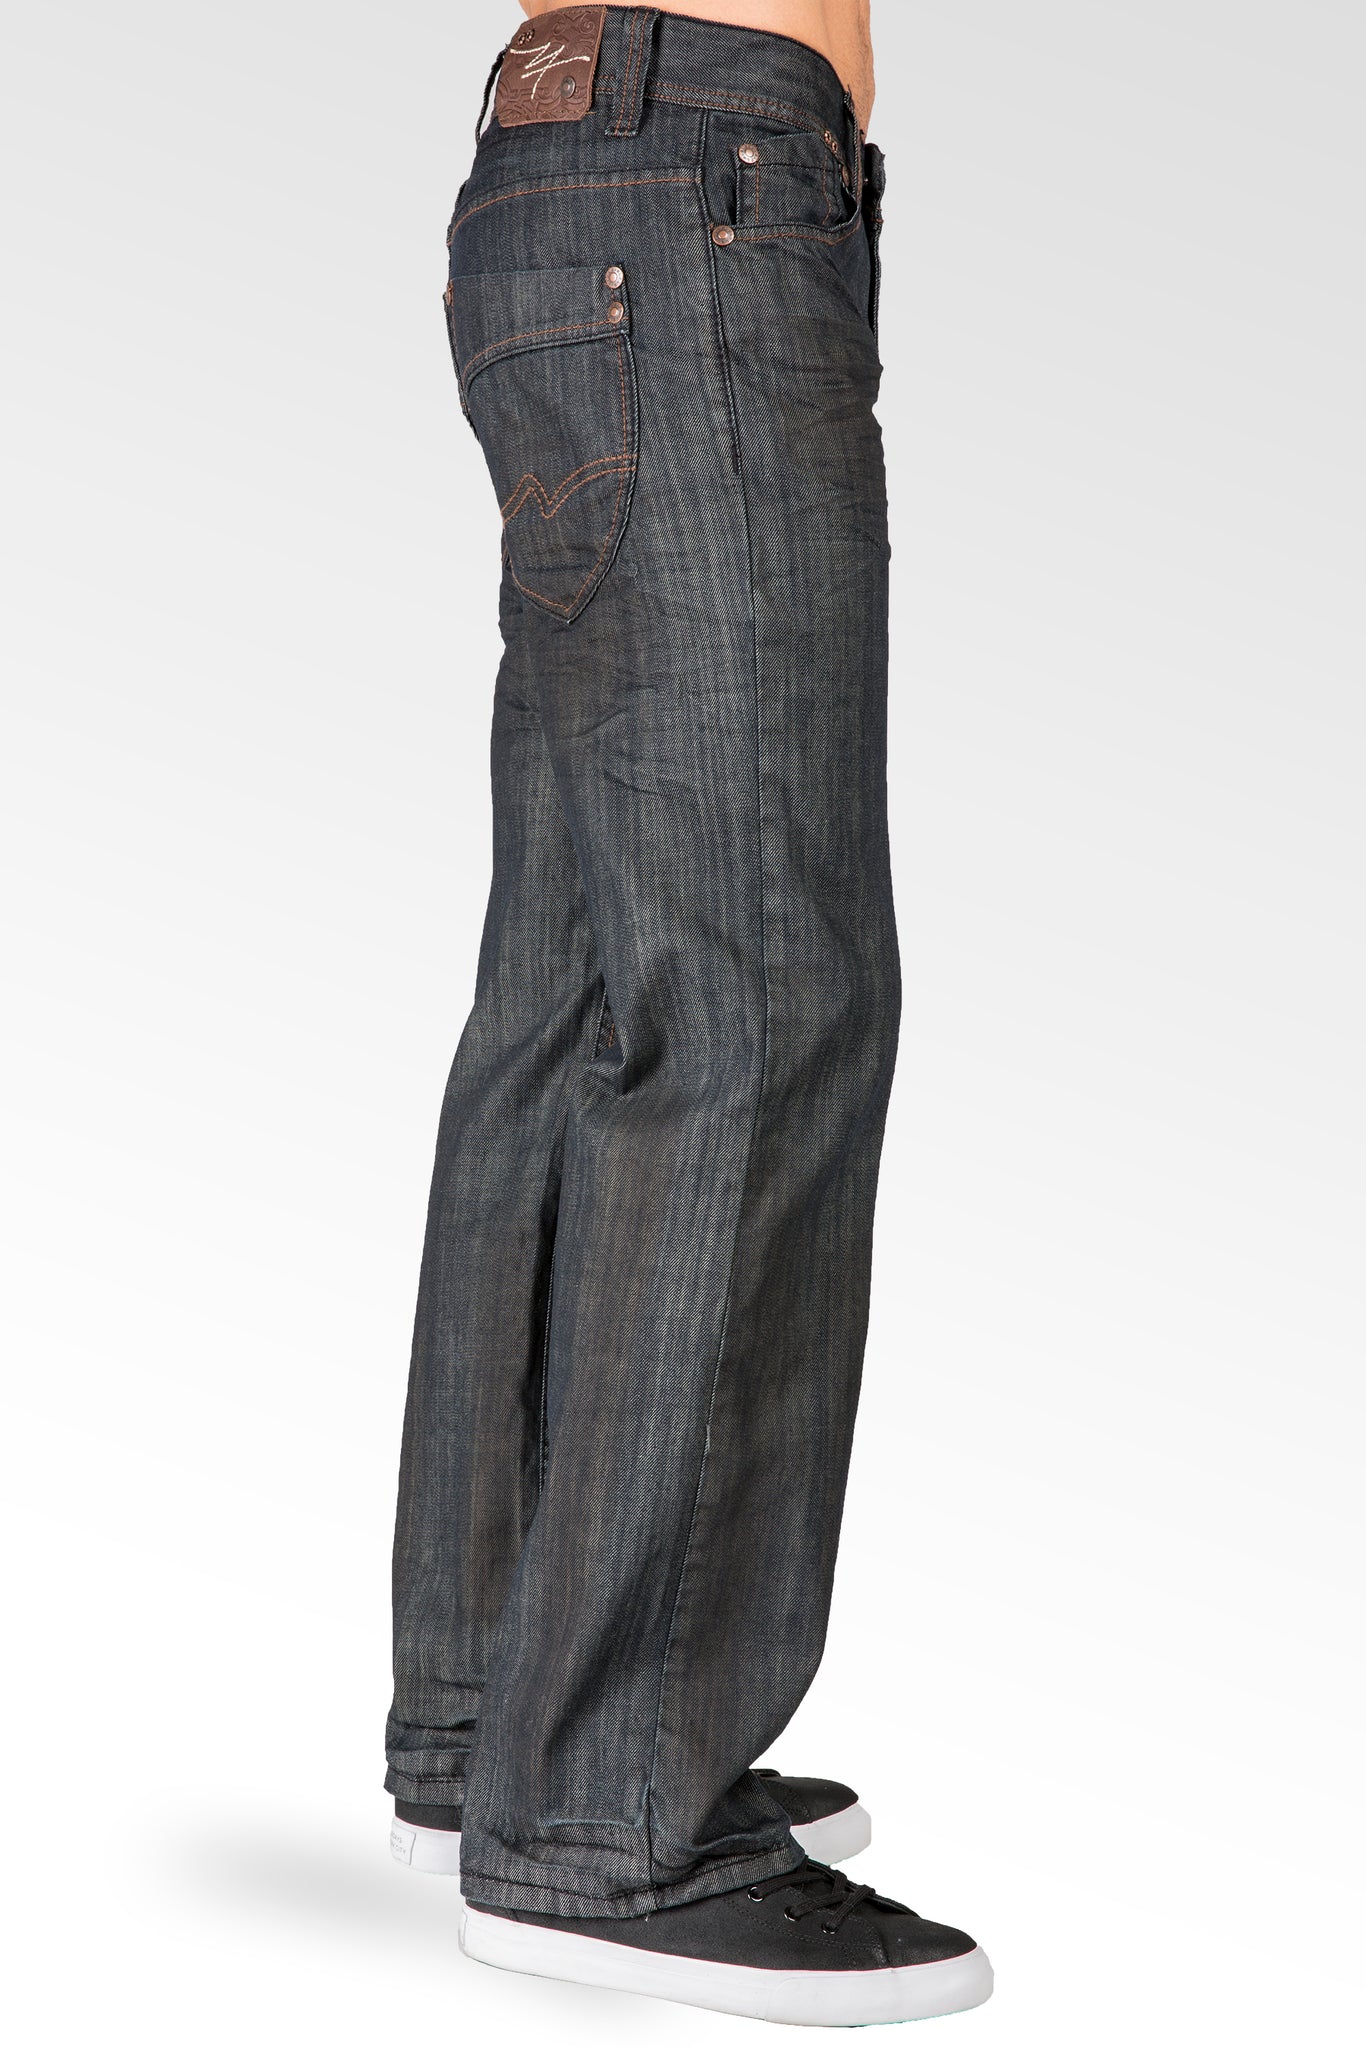 Midrise Relaxed Bootcut Dark Premium Denim 5 pocket Jeans Oil Stain Coating & Whiskering